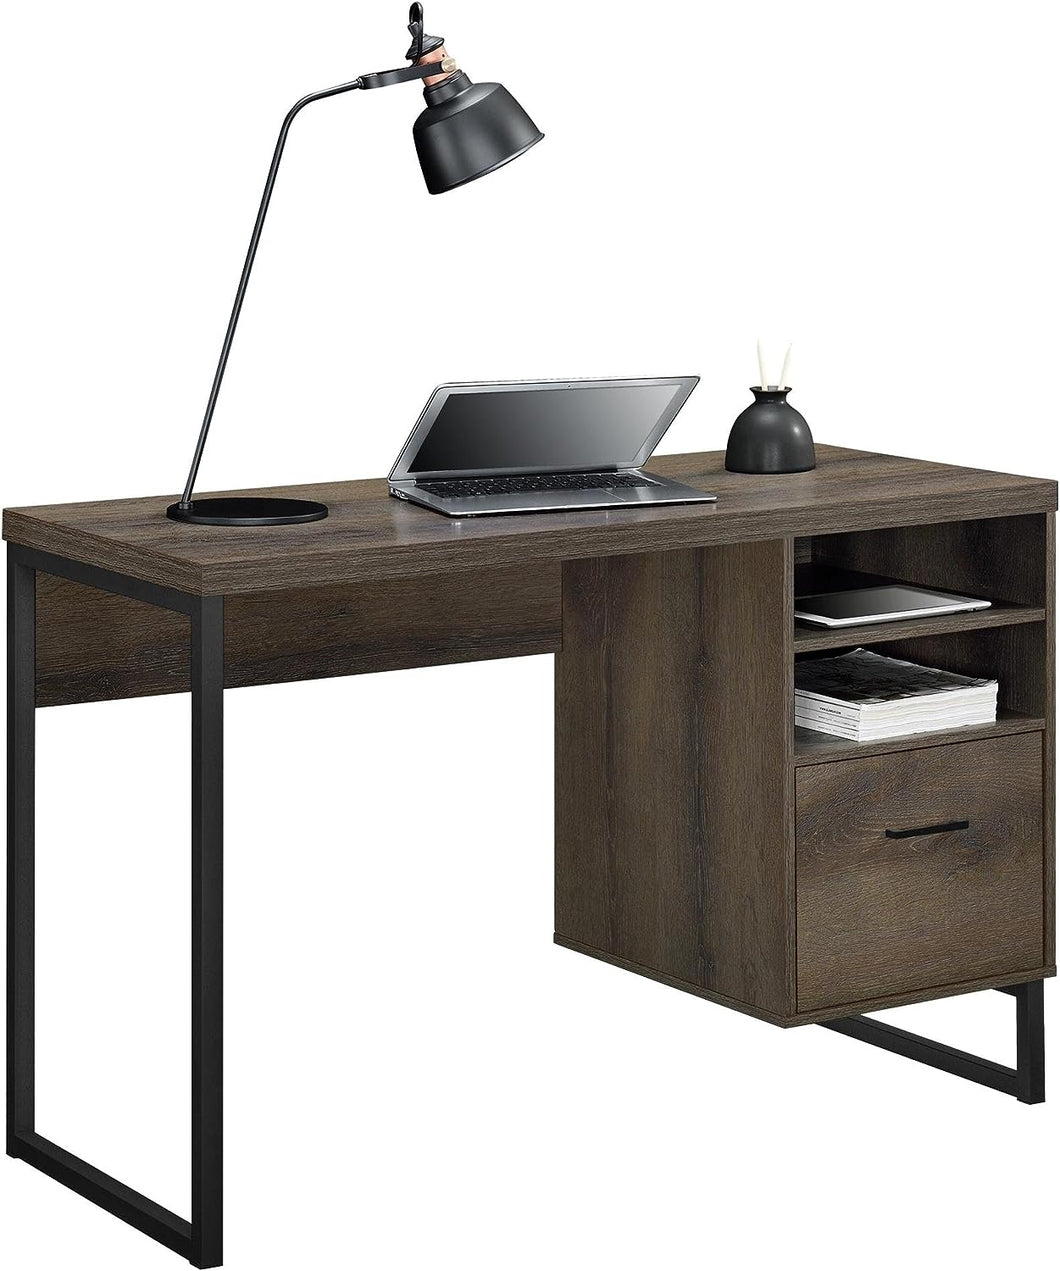 Amazon Brand - Ameriwood Home Candon Desk